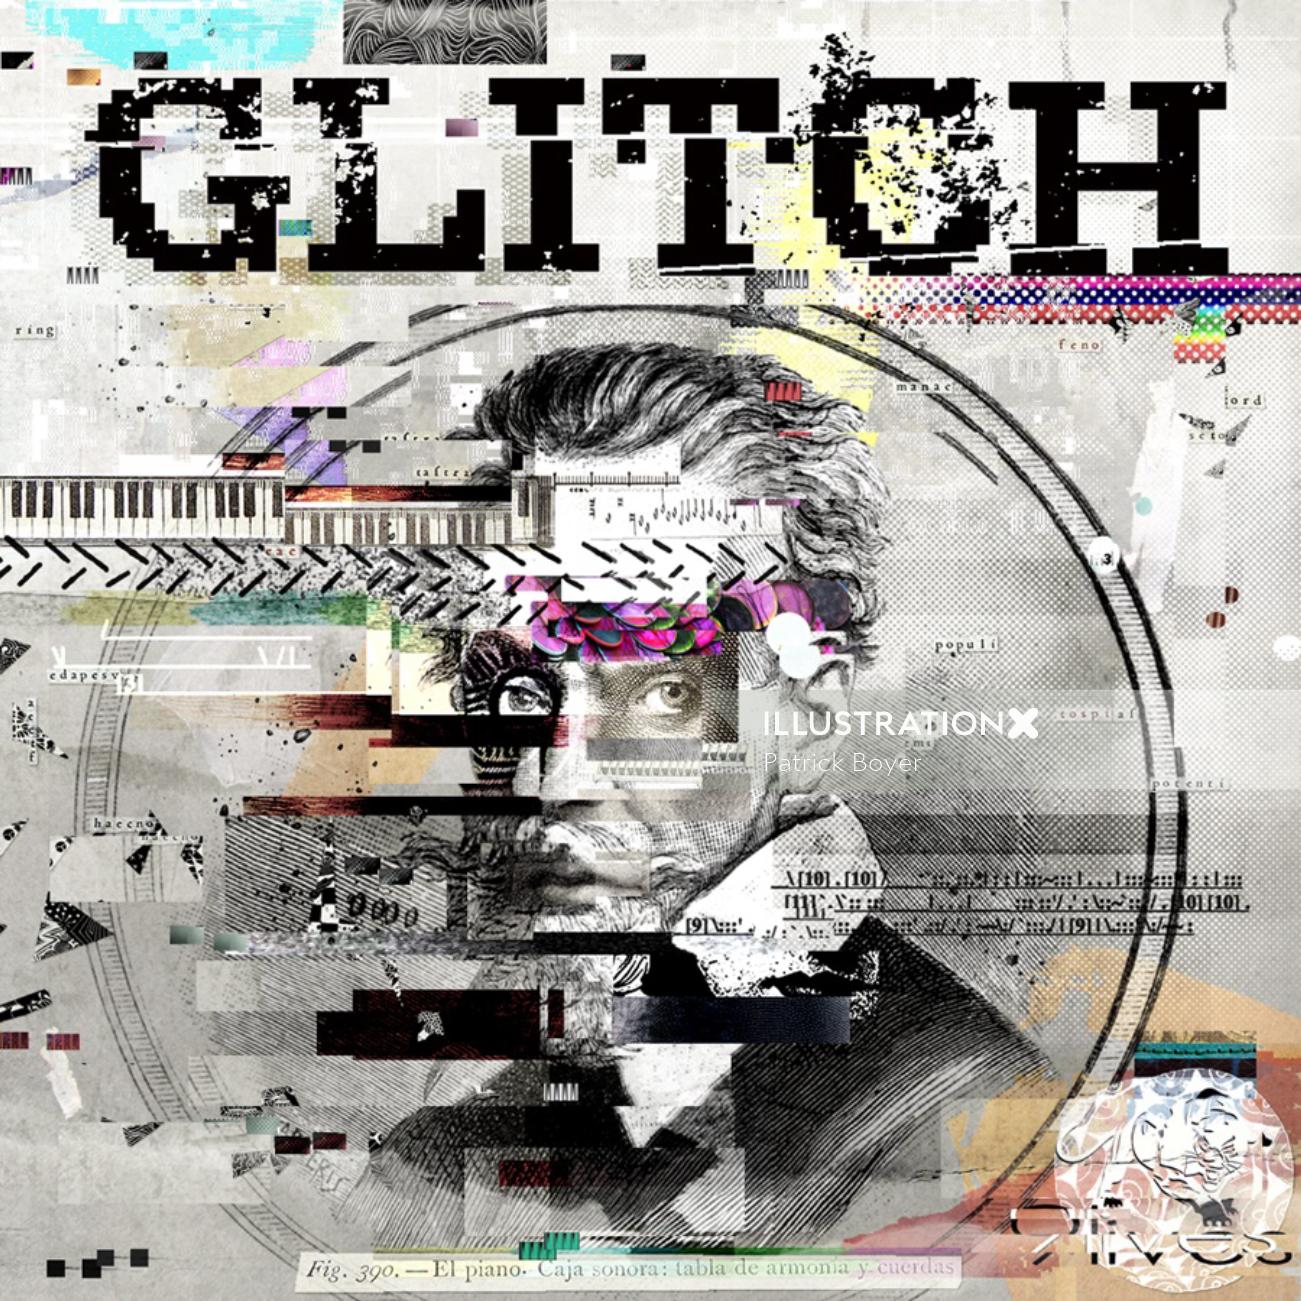 Glitch Cover illustration by Patrick Boyer